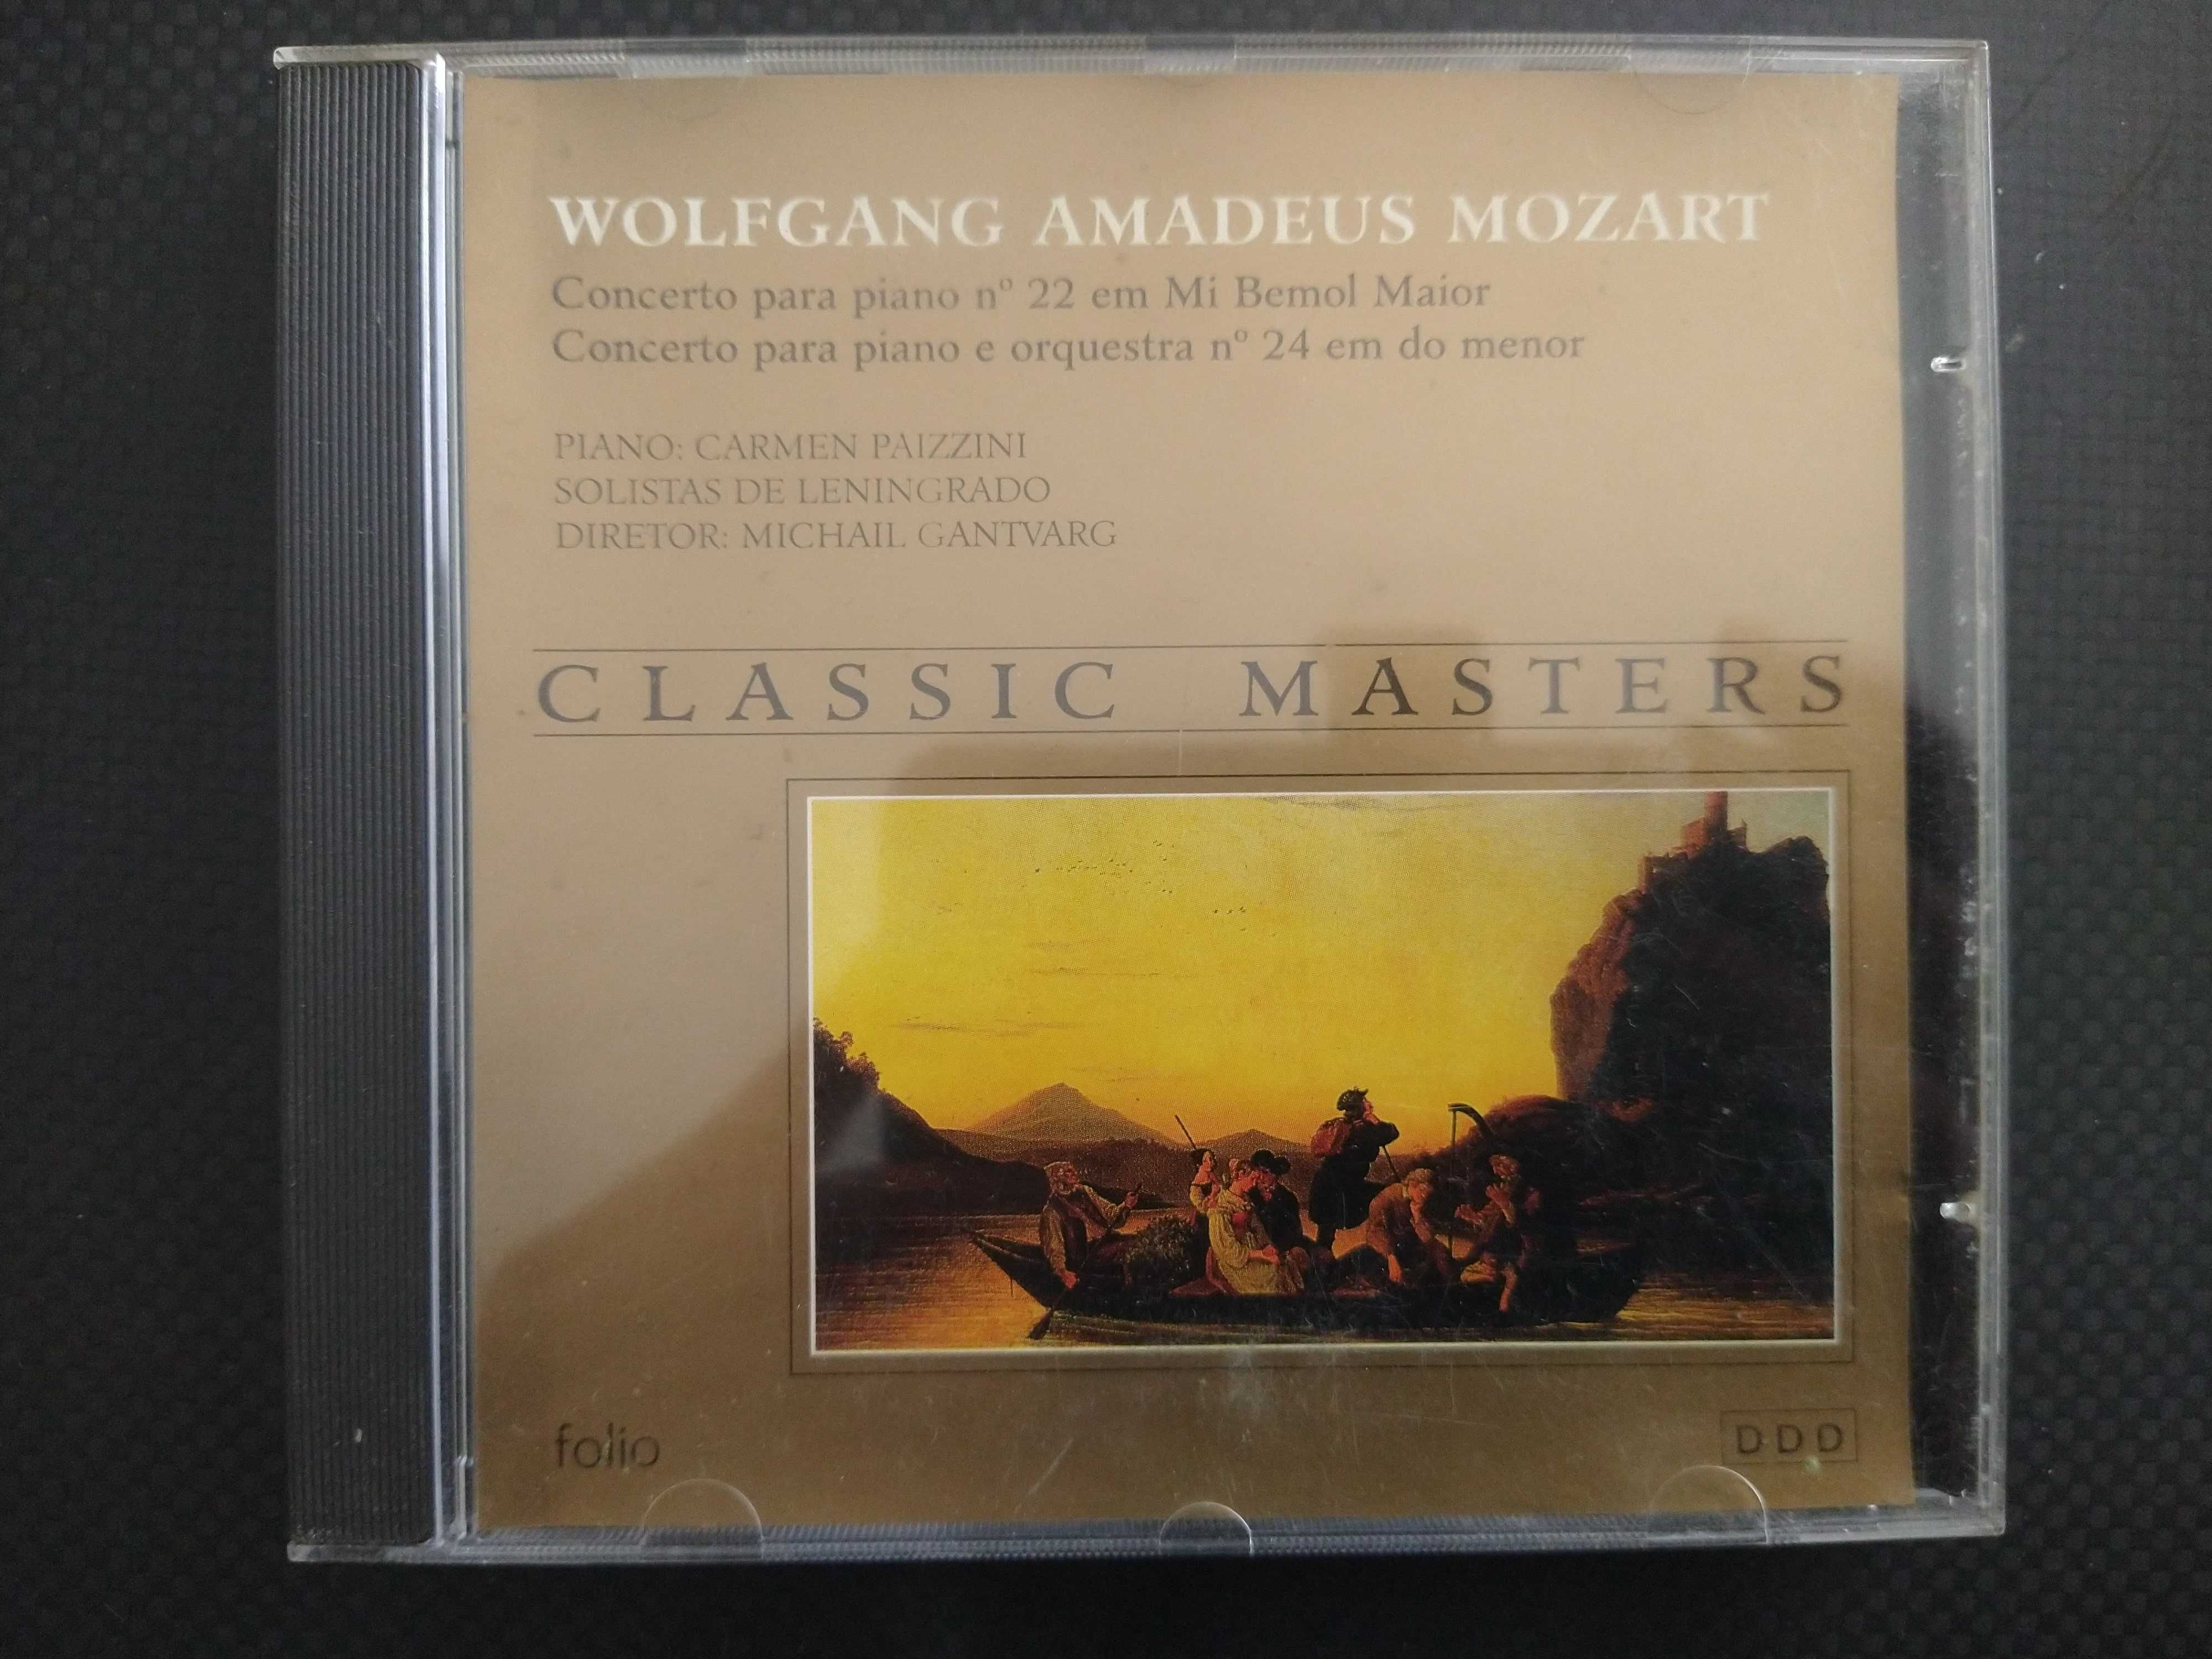 CD Mozart "Concerto para Piano n. 22" - Classic Masters